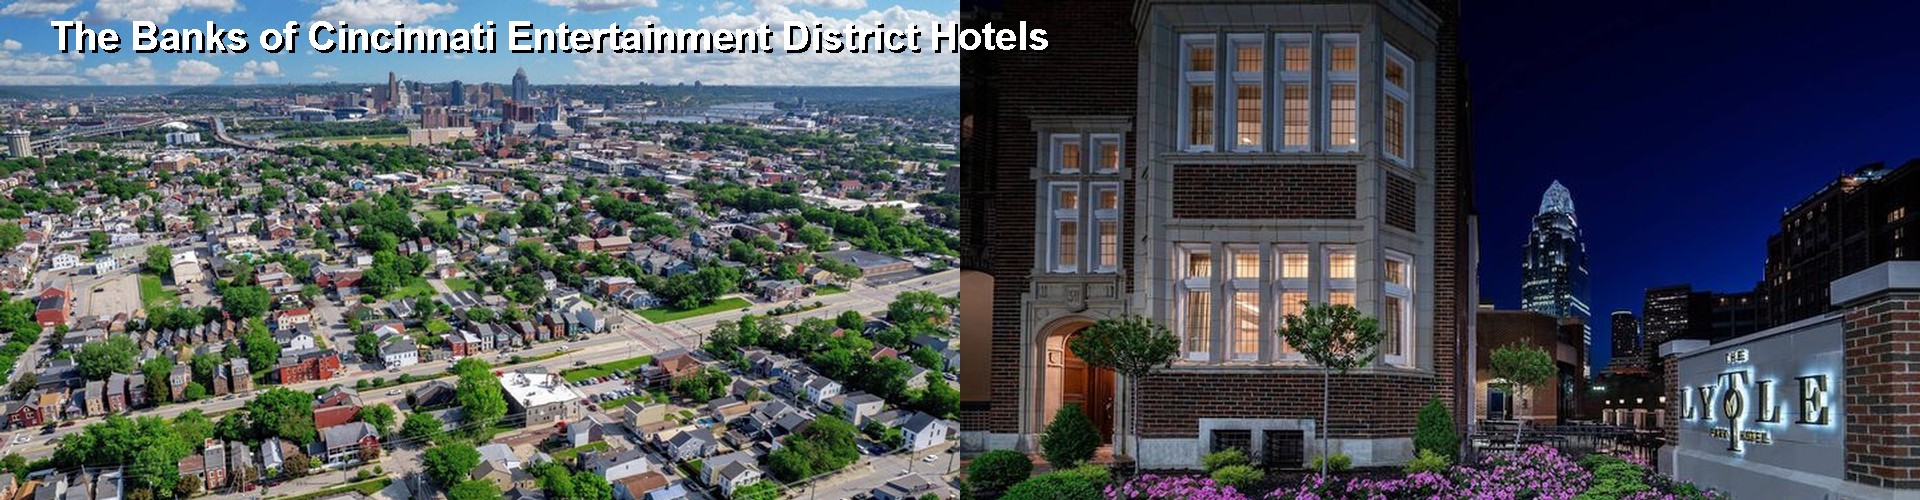 5 Best Hotels near The Banks of Cincinnati Entertainment District